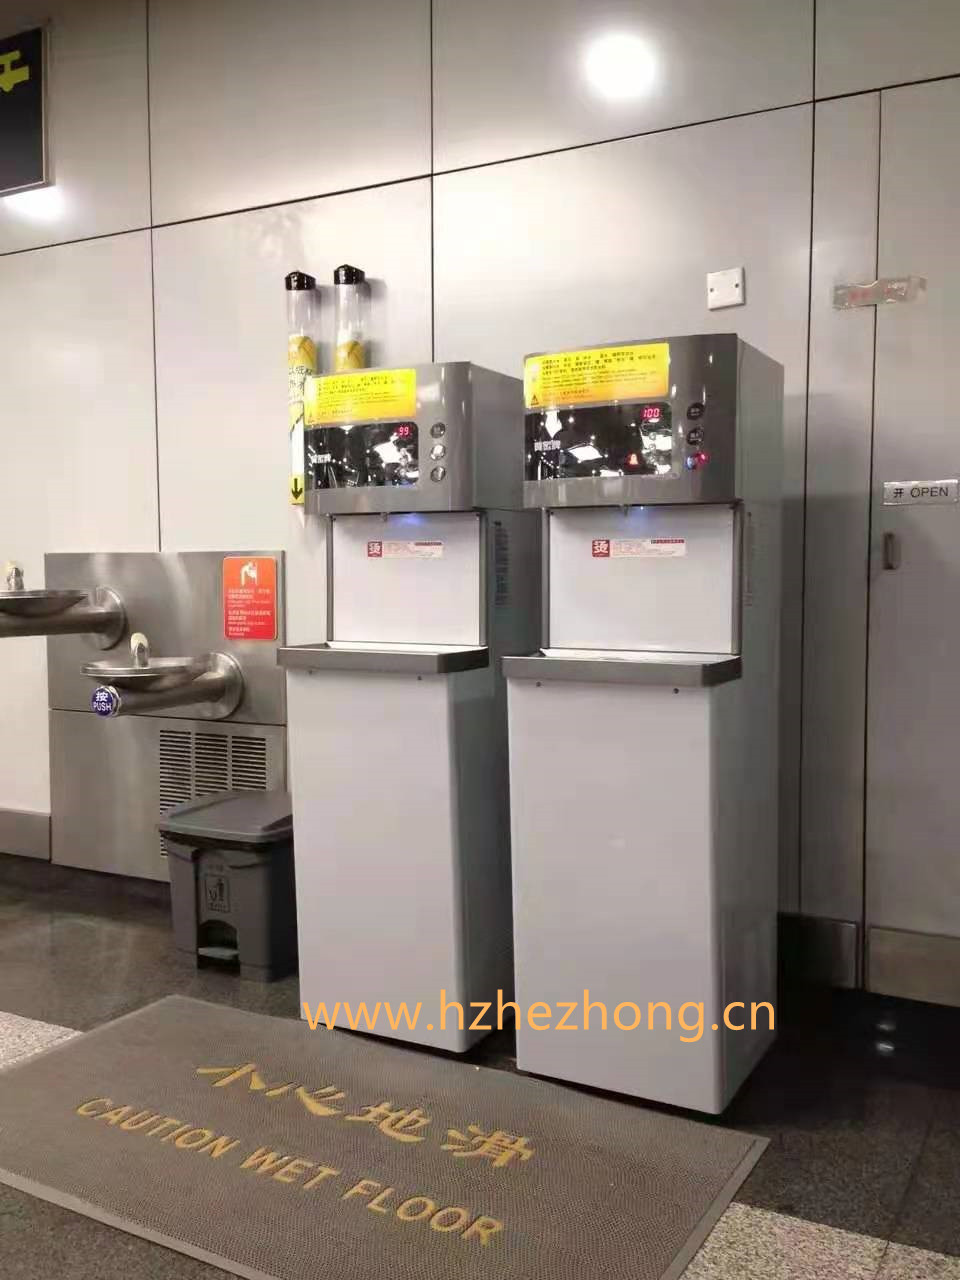 Beijing Capital International Airport chooses ACUO brand water dispenser